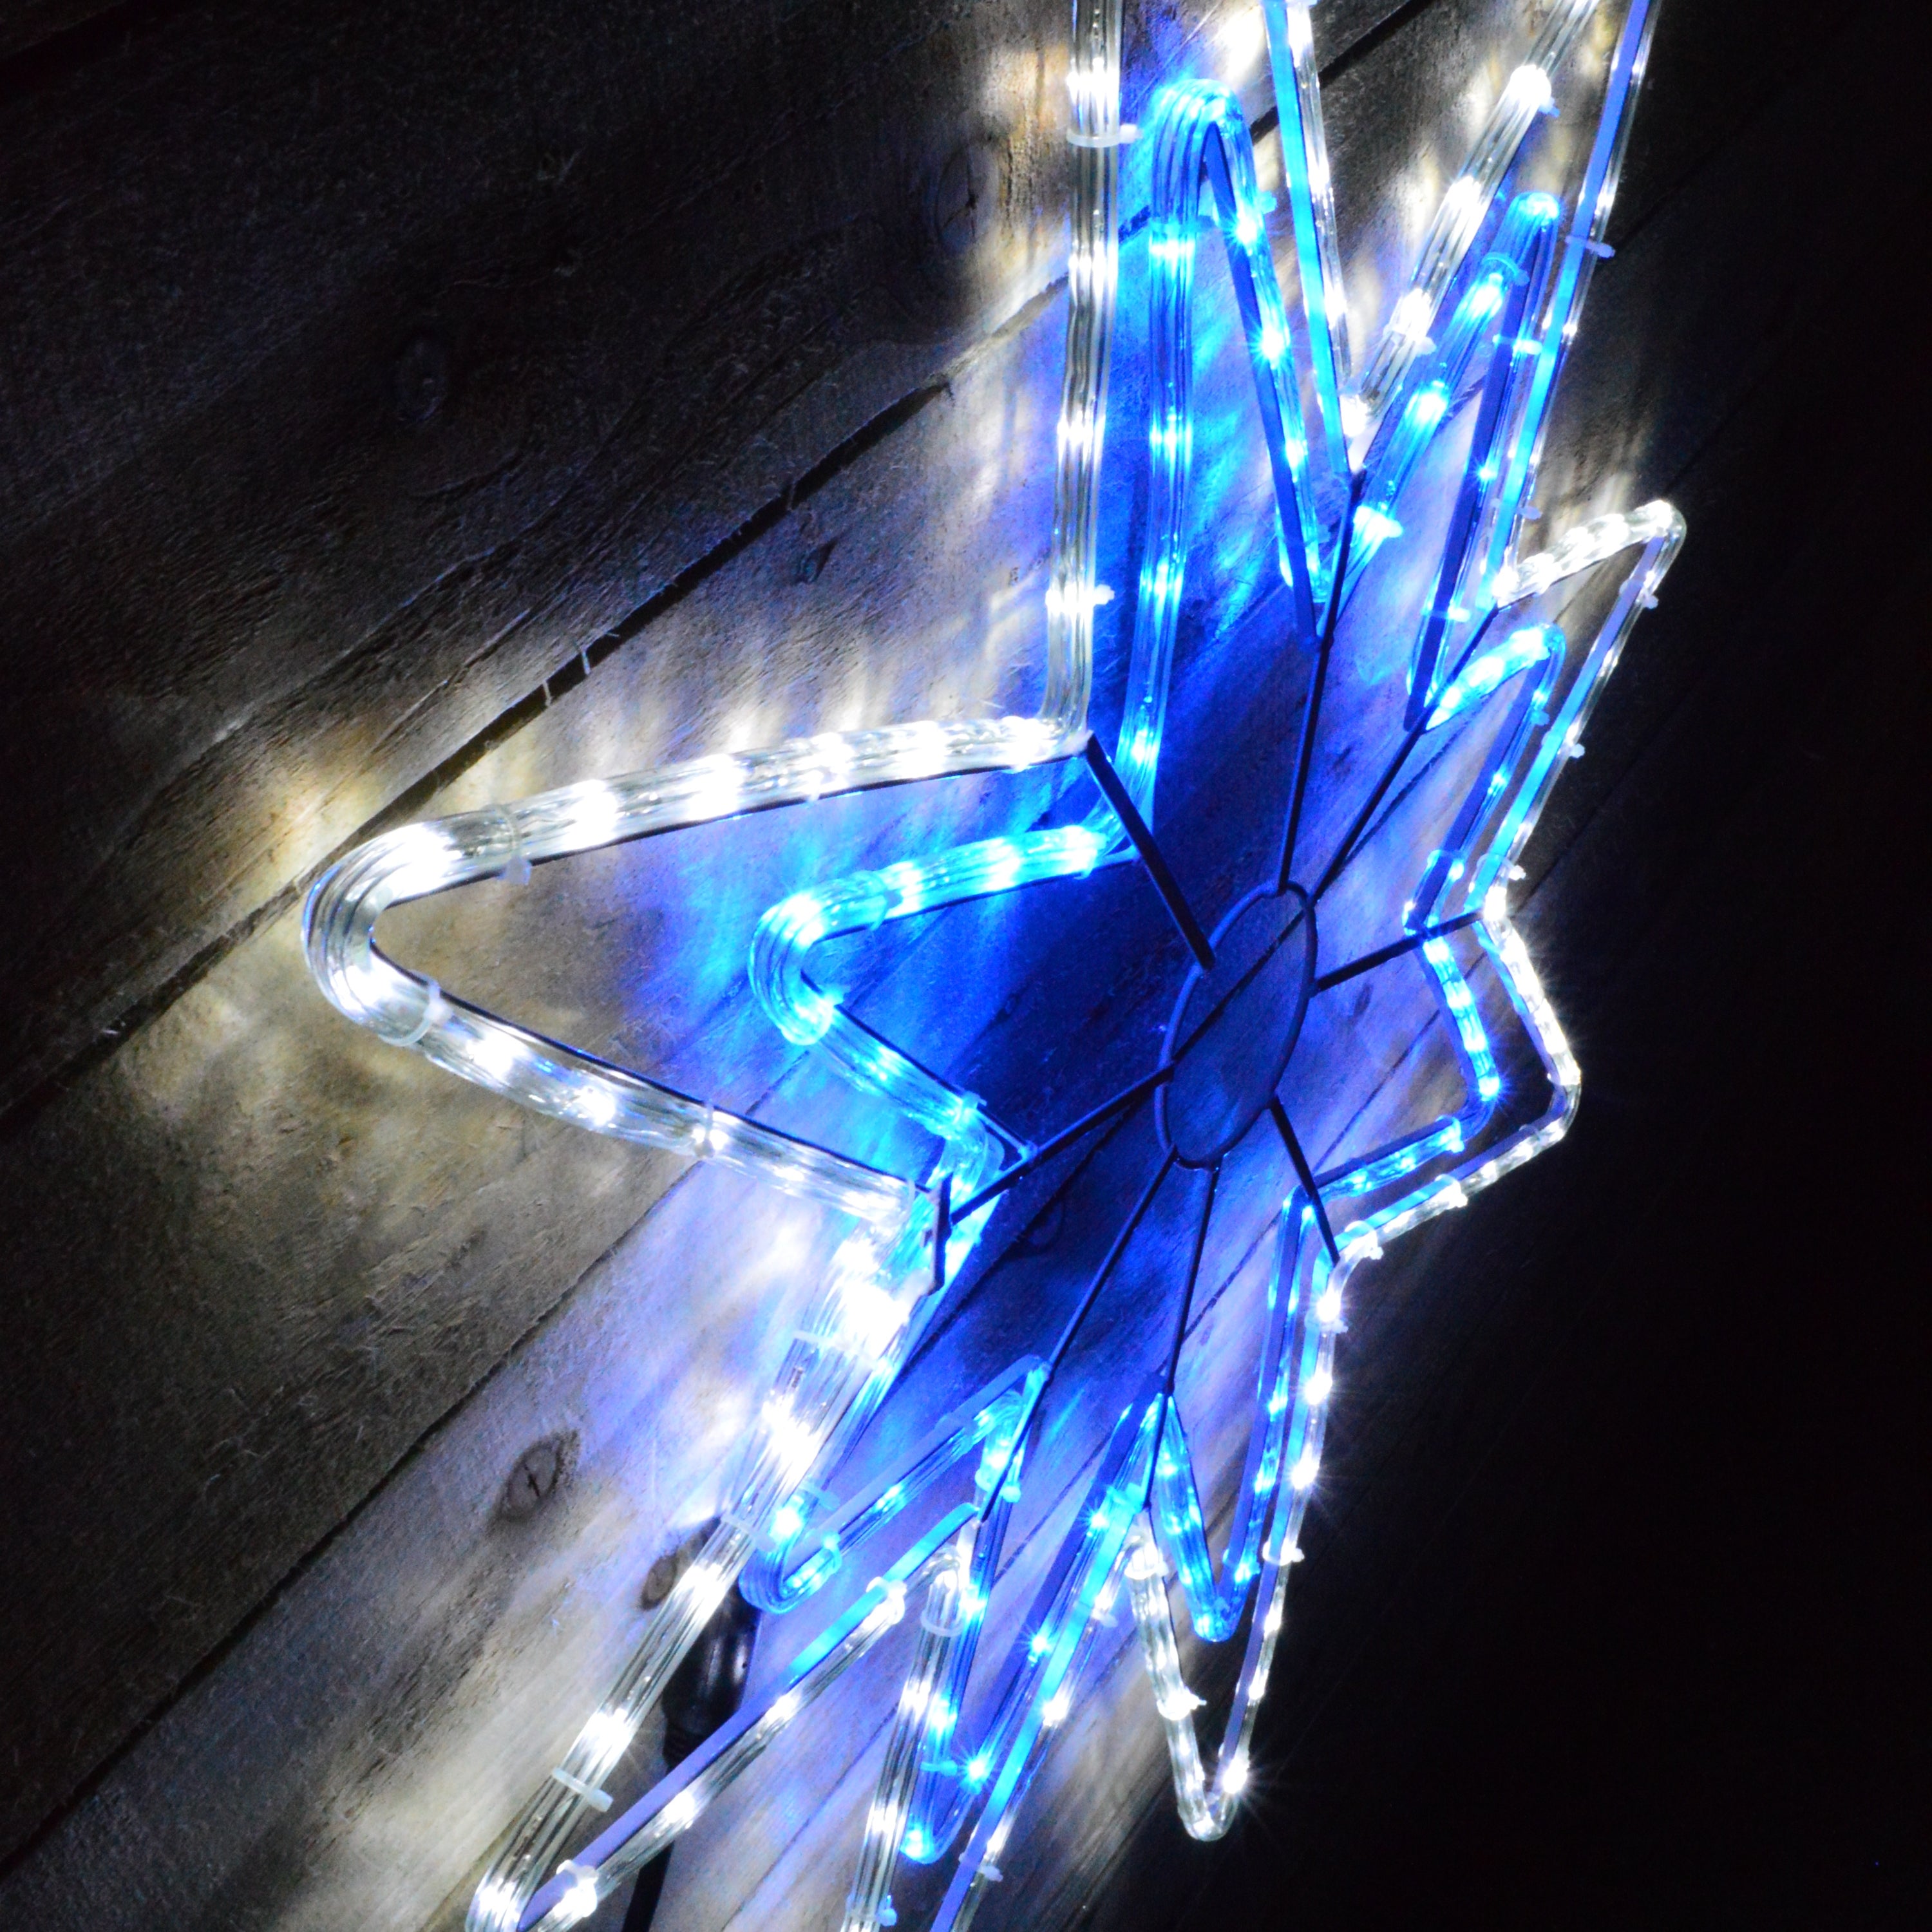 95cm x 70cm Blue & White LED Star Rope Light Silhouette Christmas Decoration